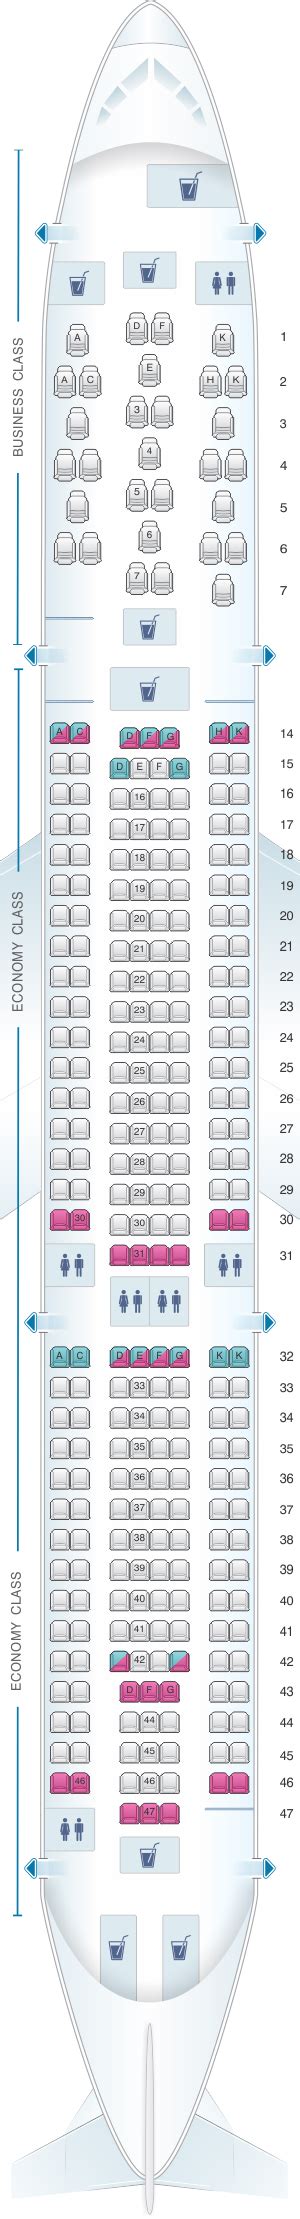 Air Transat A330 Seat Map